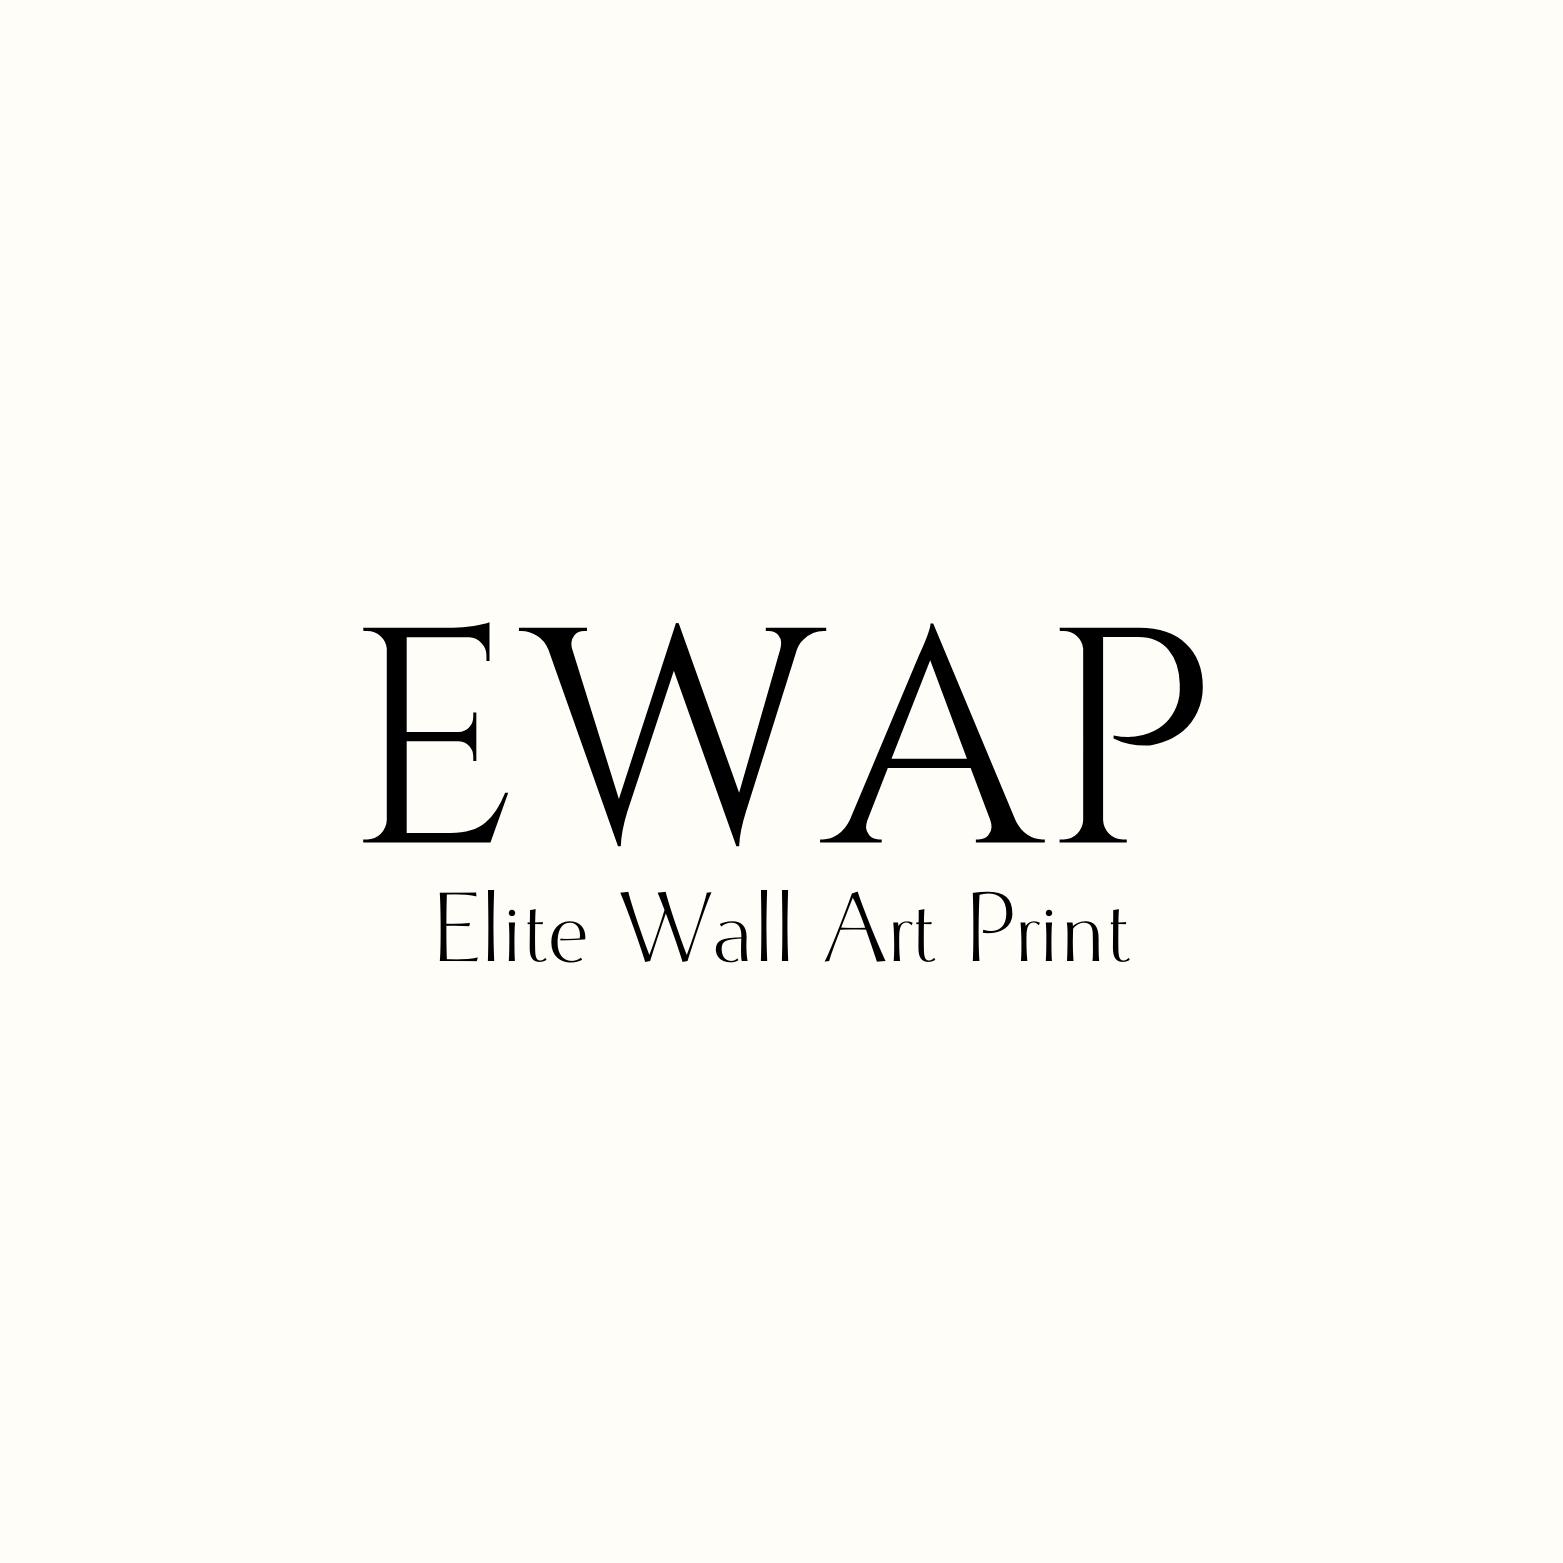 Elite Wall Art Print Logo